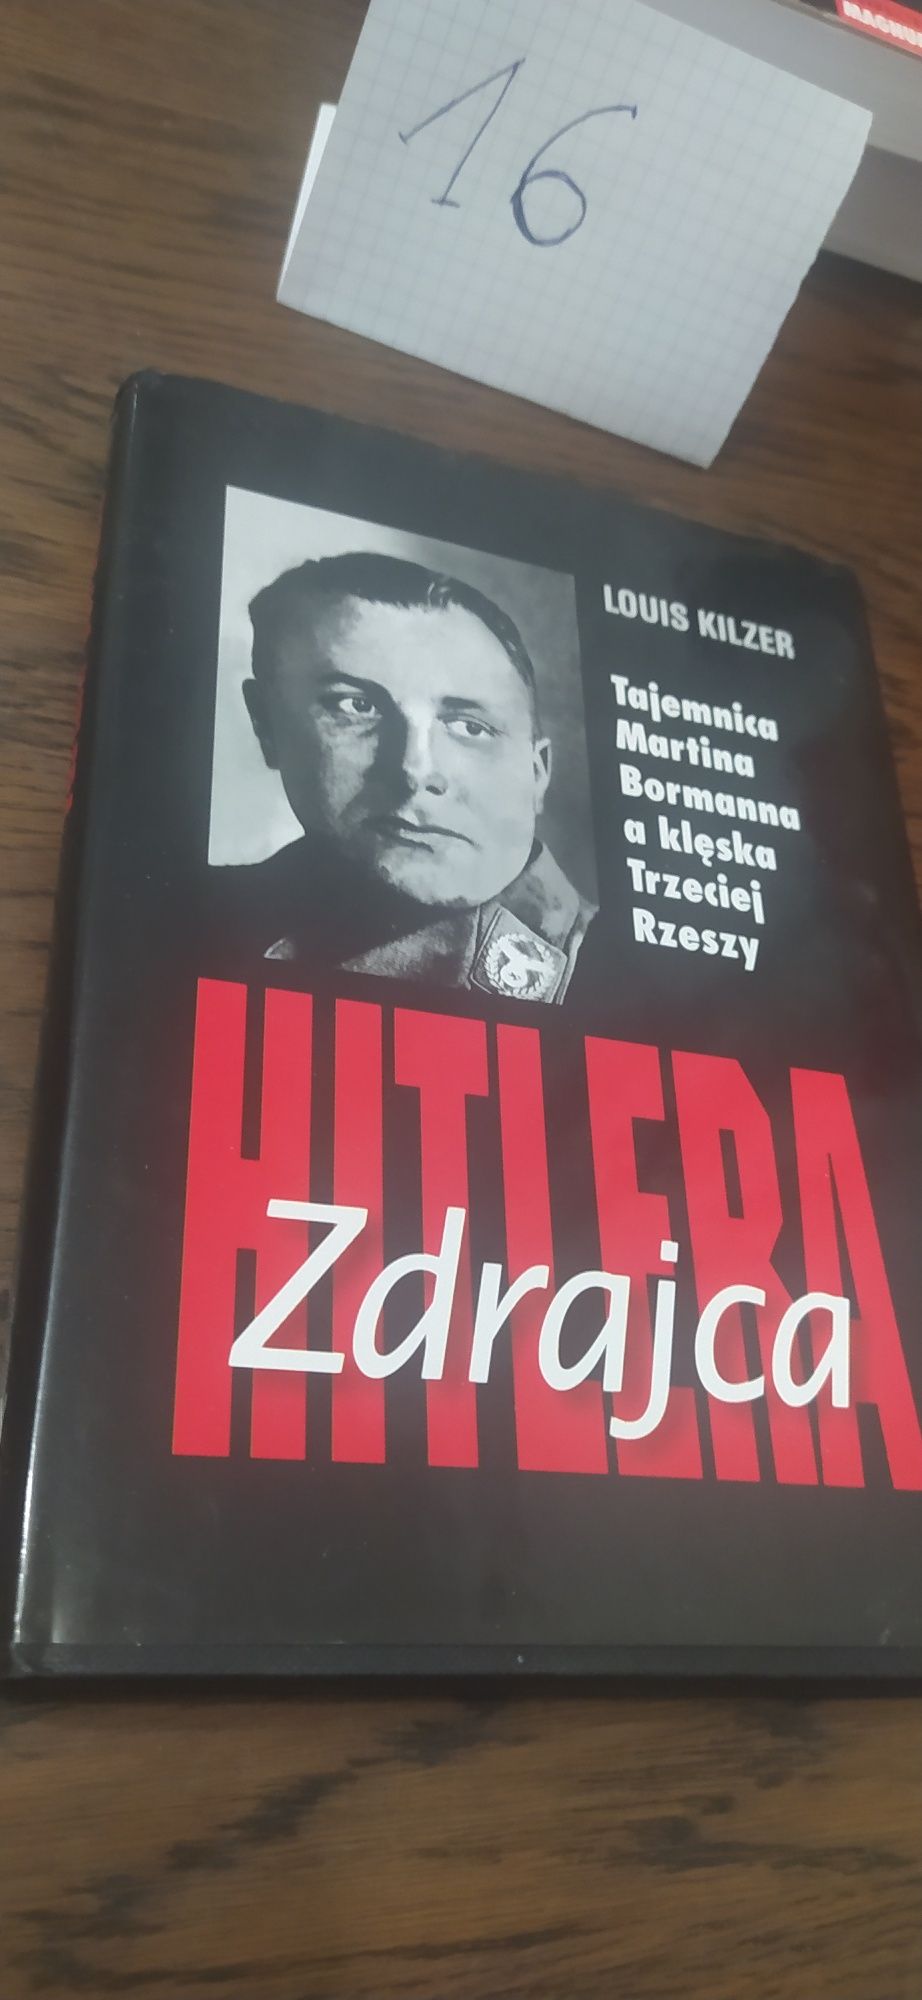 Louis Kilzer Zdrajca Hitlera